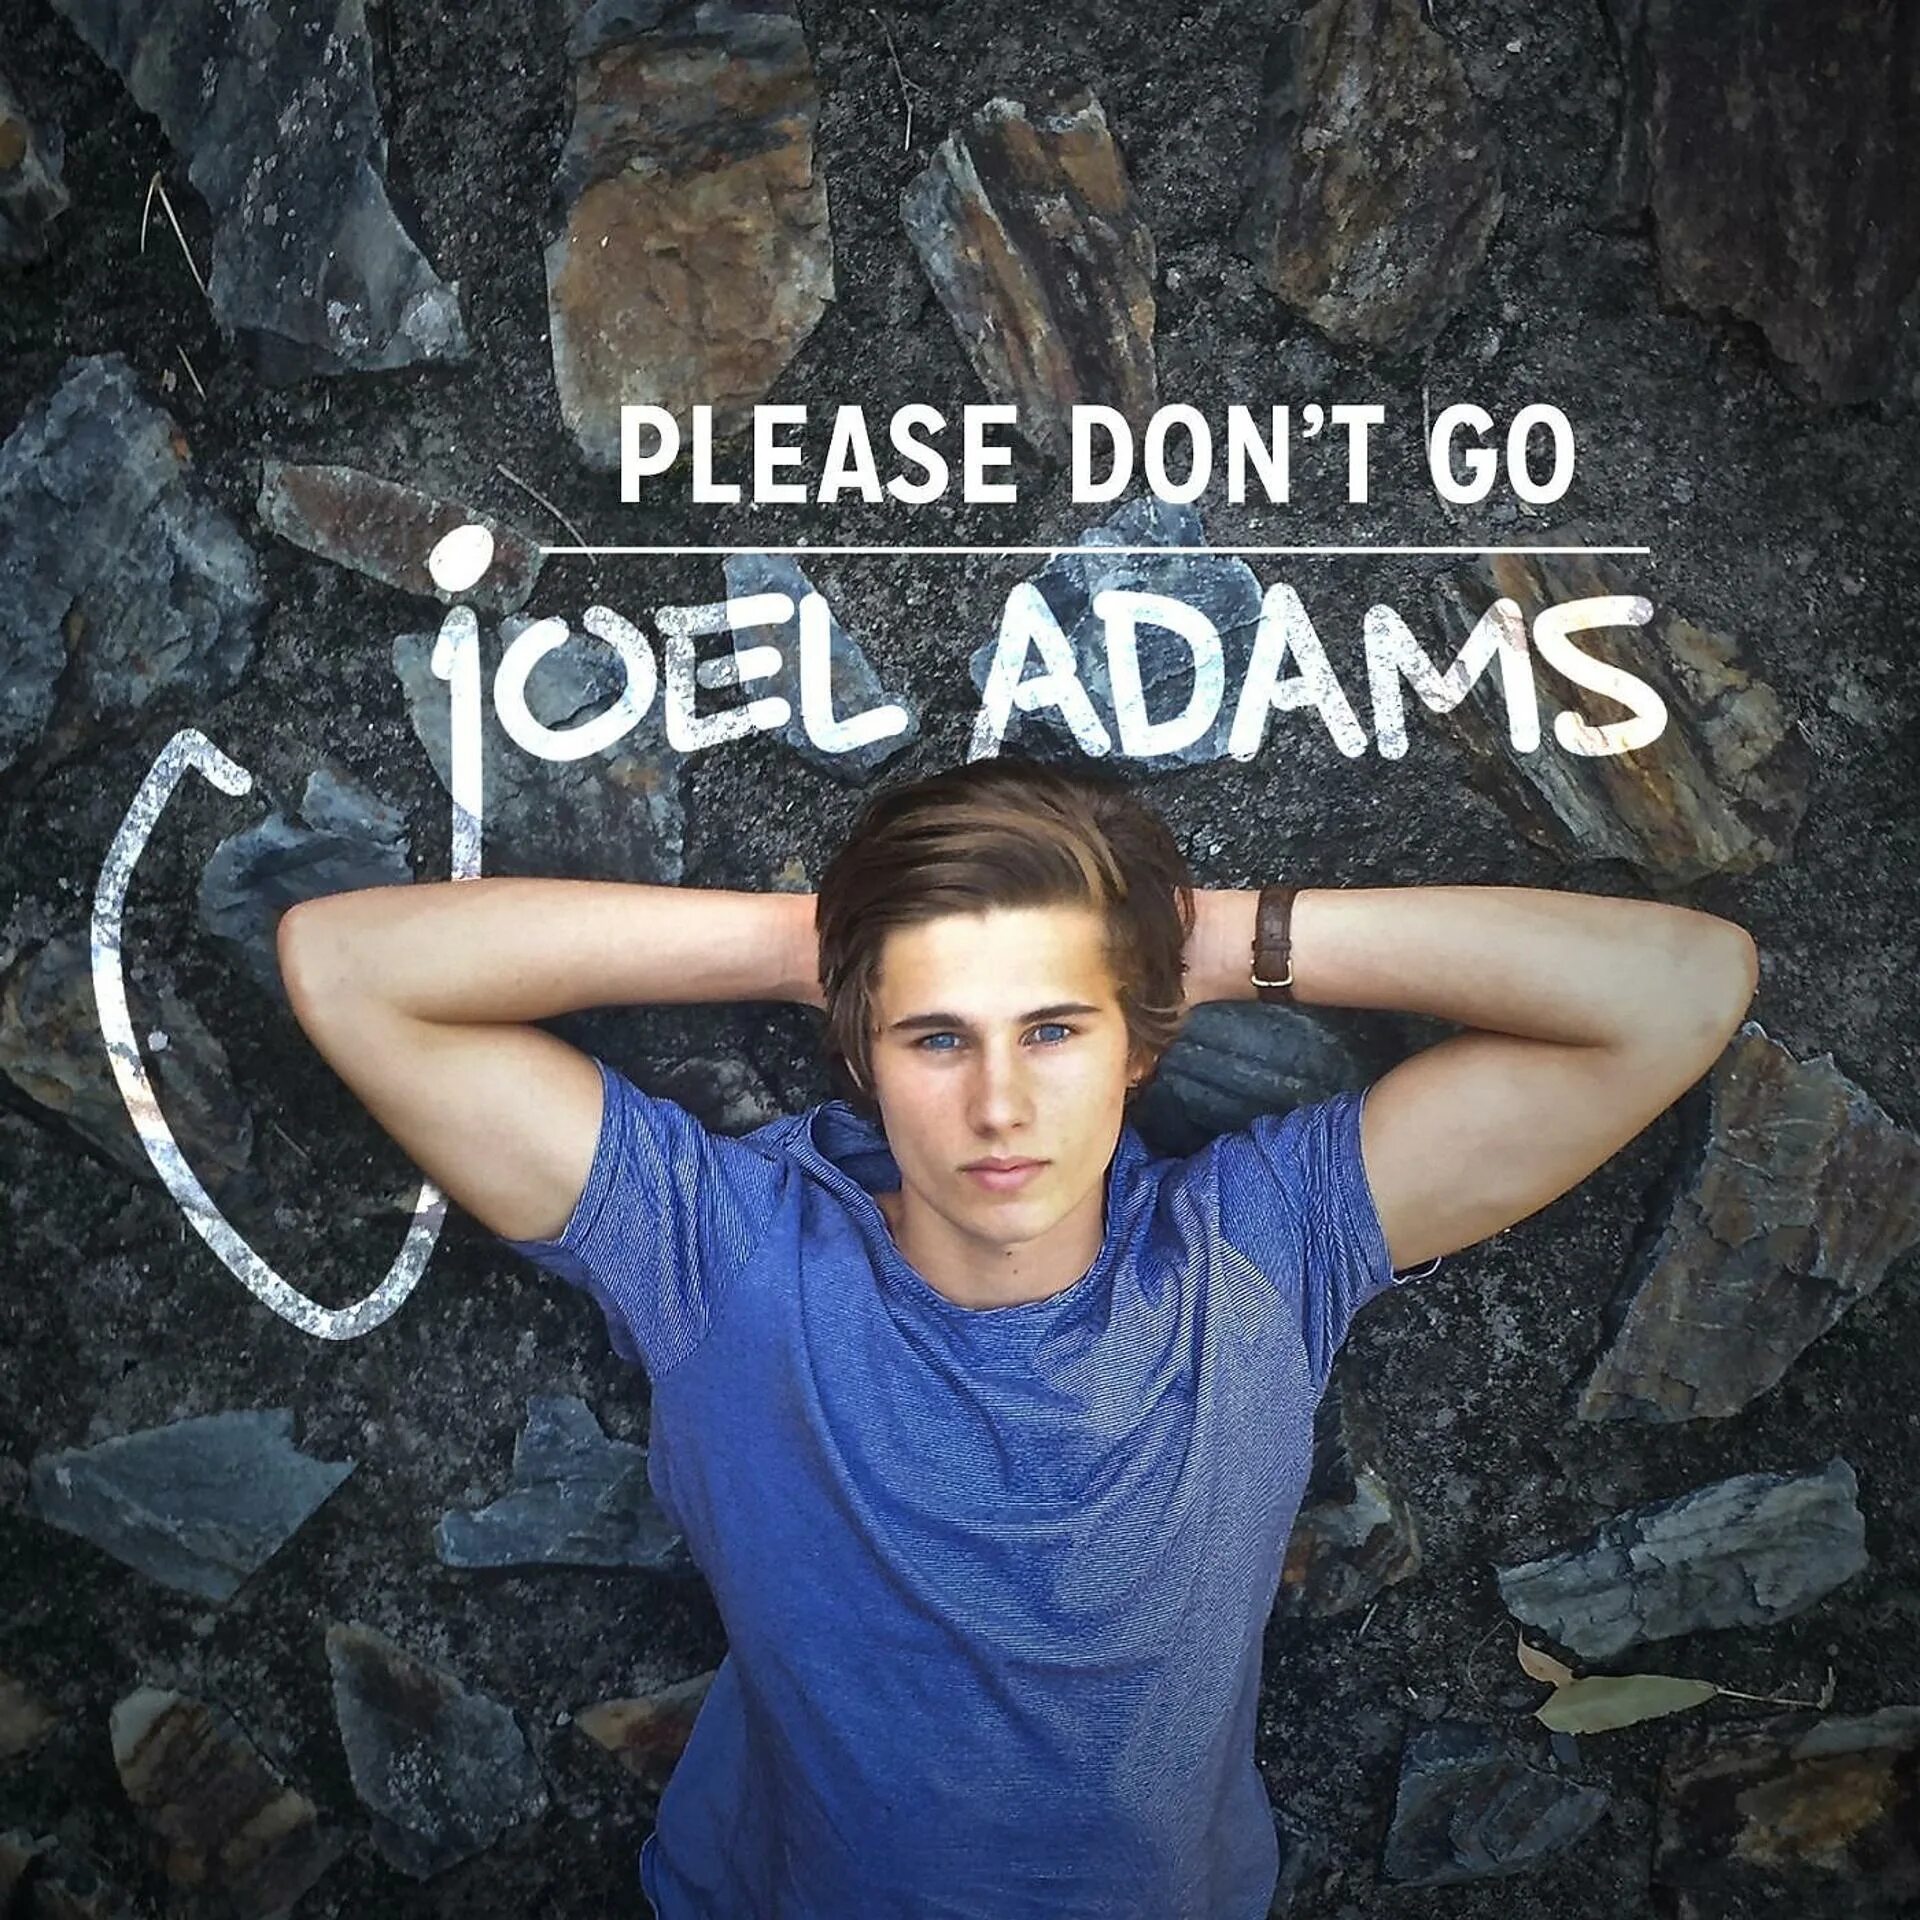 Joel Adams. Please don't go Джоэл Адамс. Трек don't go. Please don't. Плиз слушать